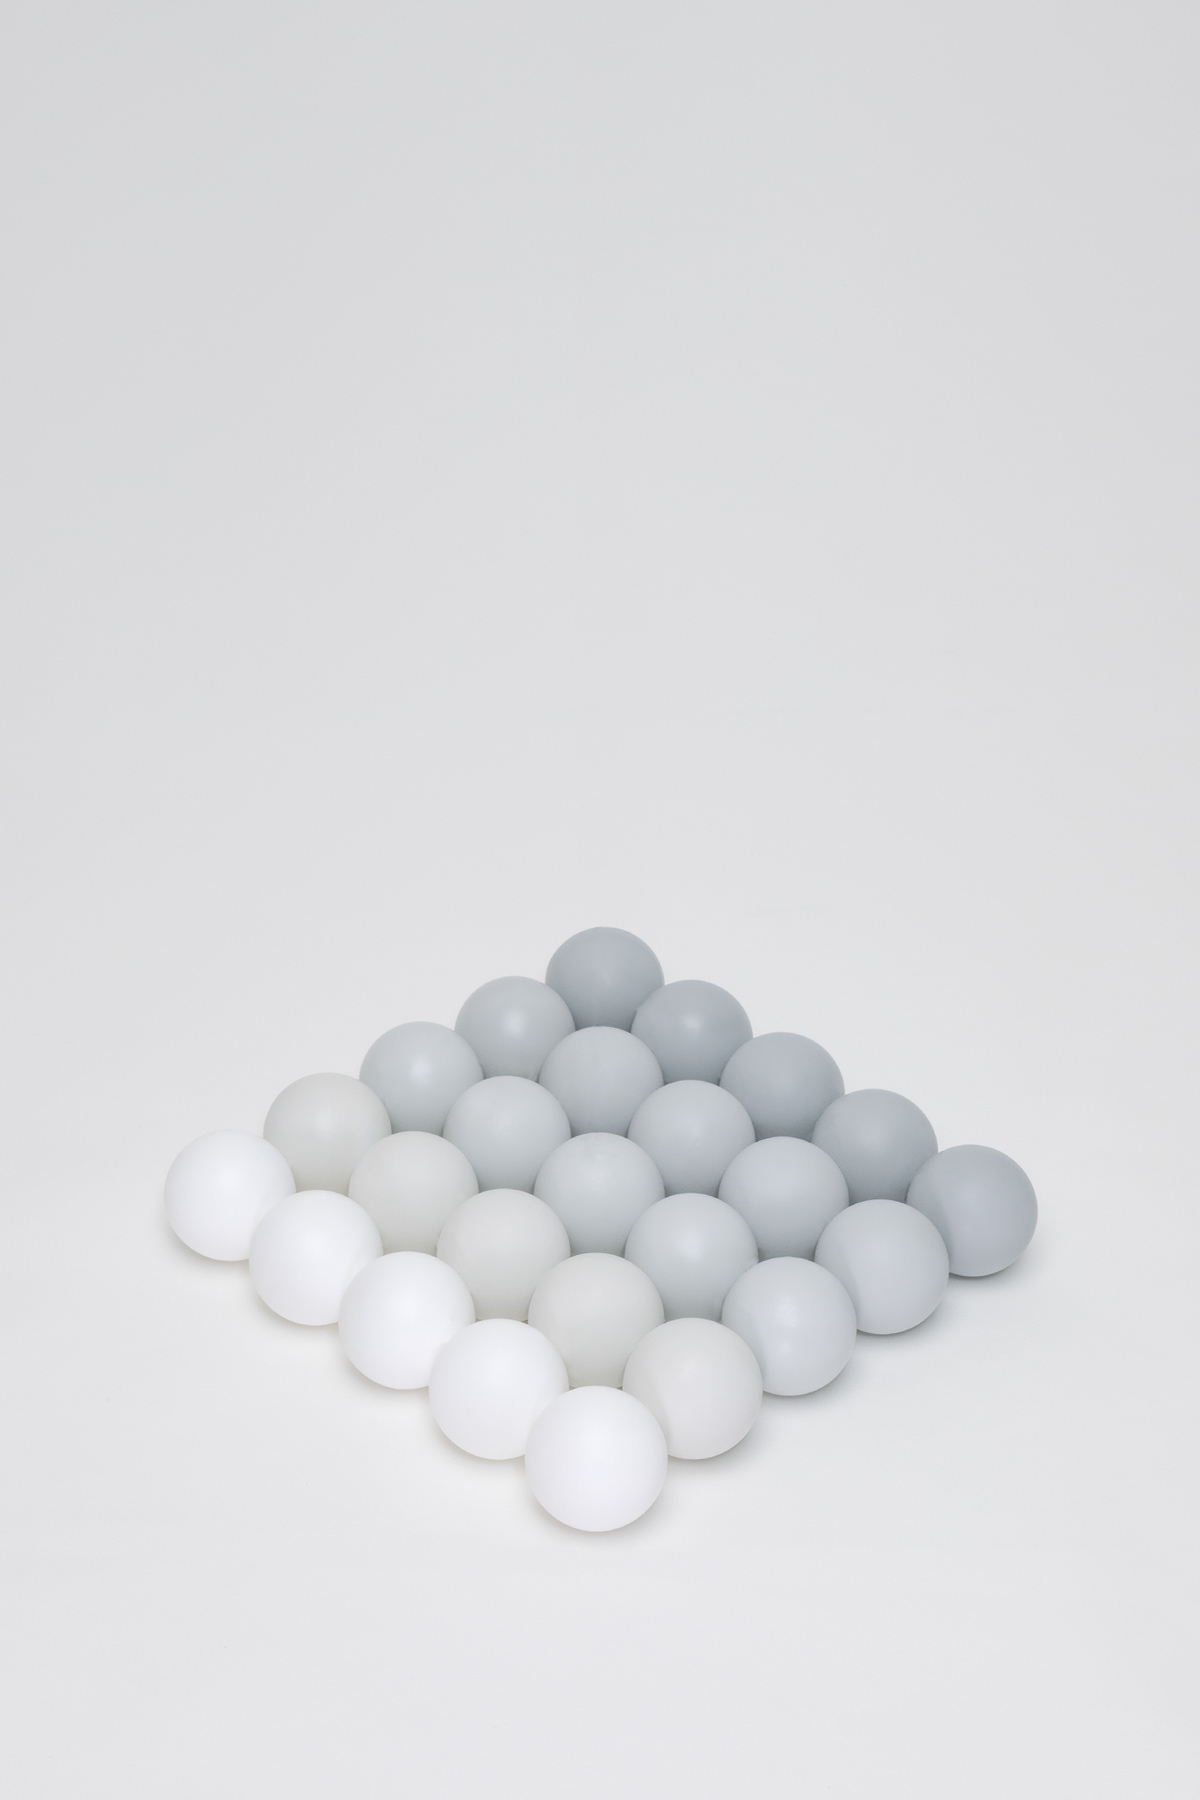 concept contemporary leviation minimal spheres Canon lightroom photoshop finart